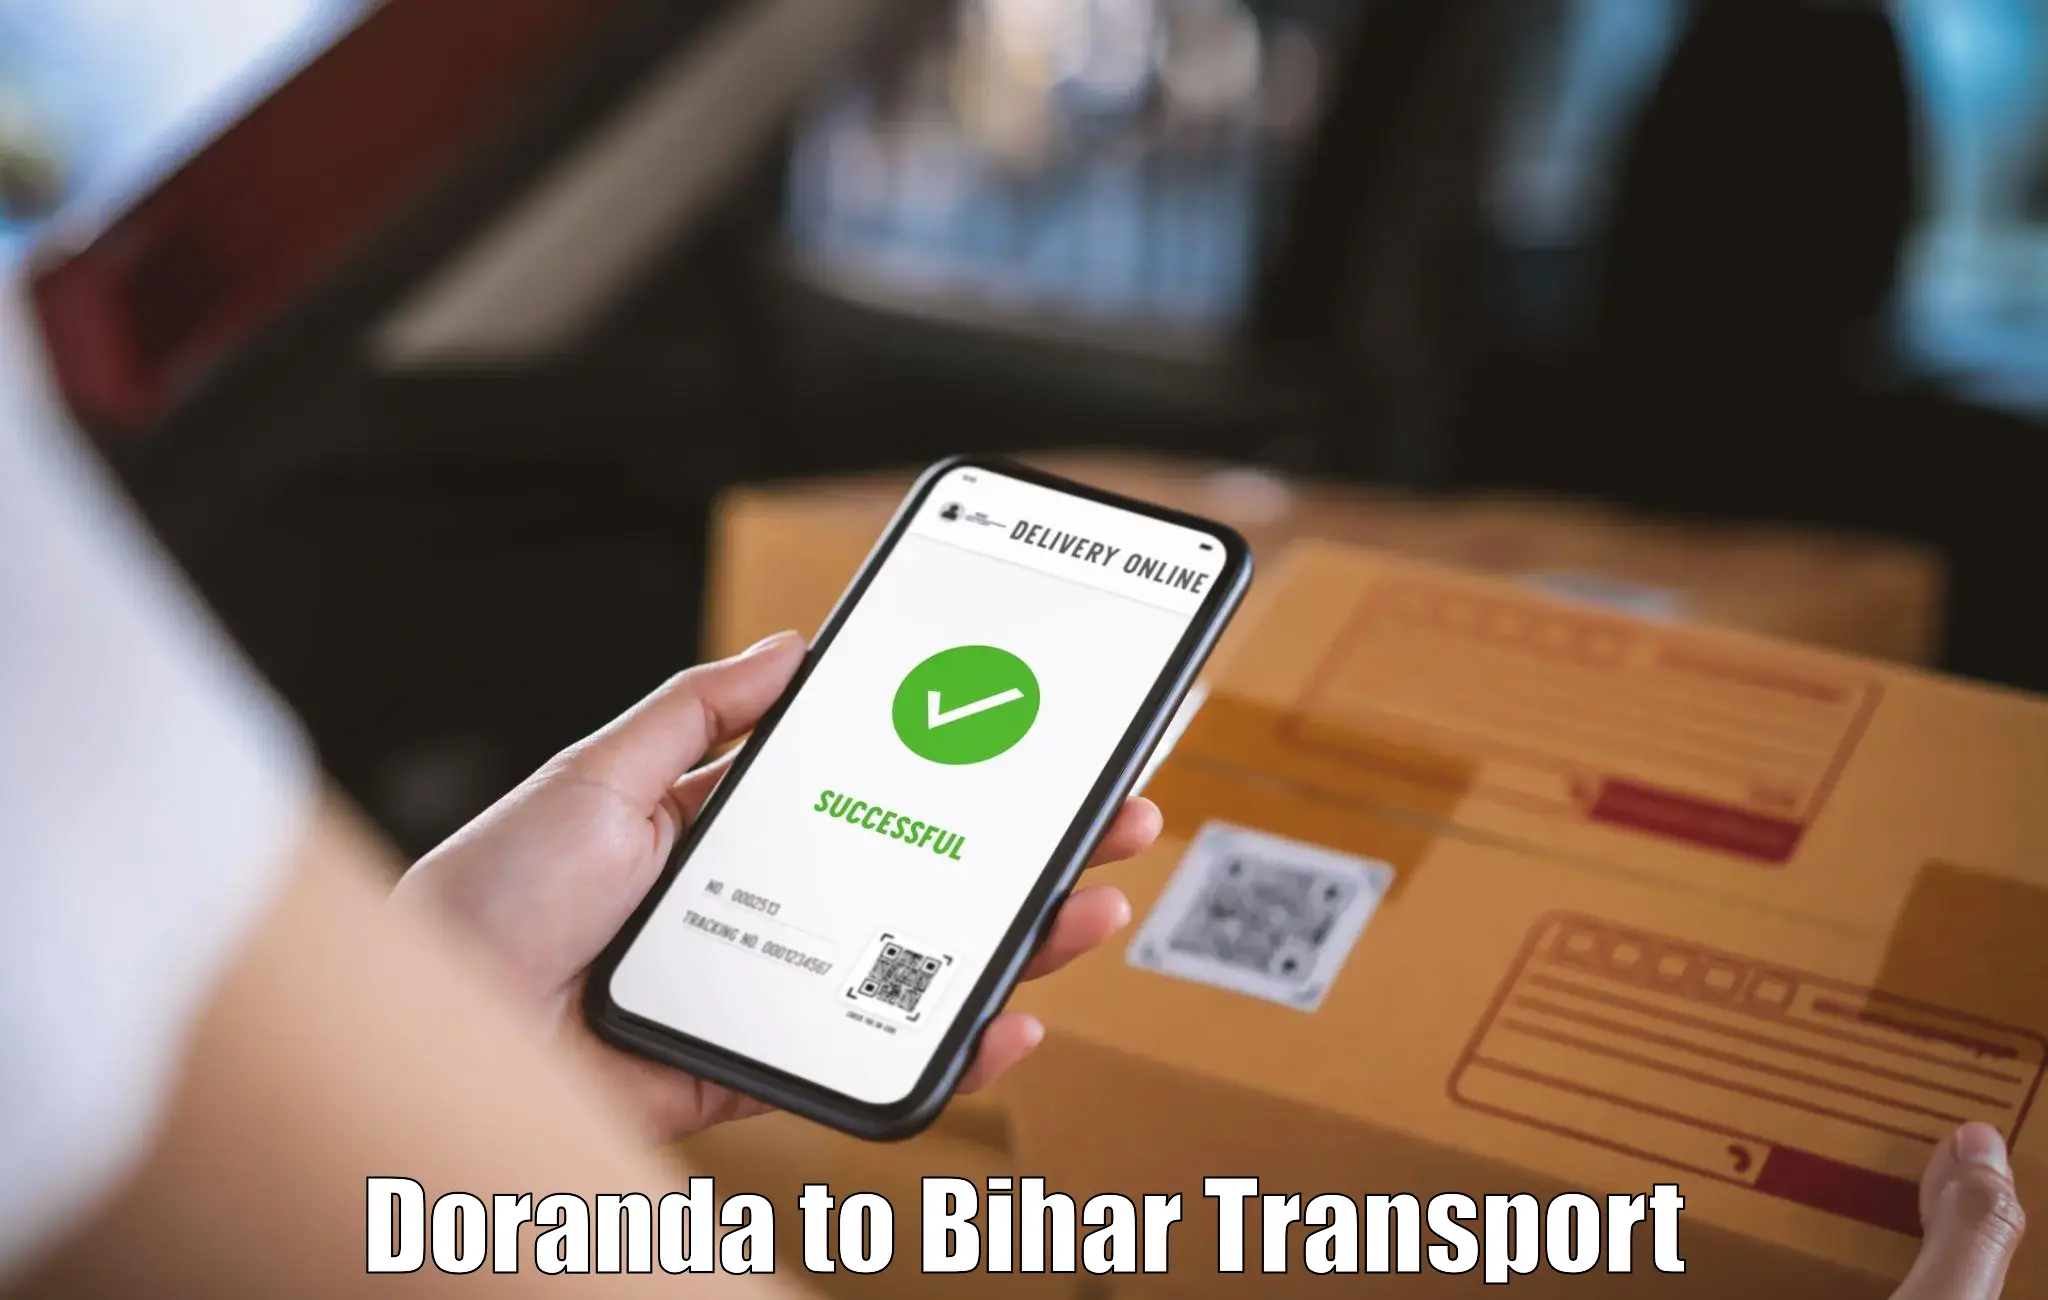 Sending bike to another city Doranda to Bihar